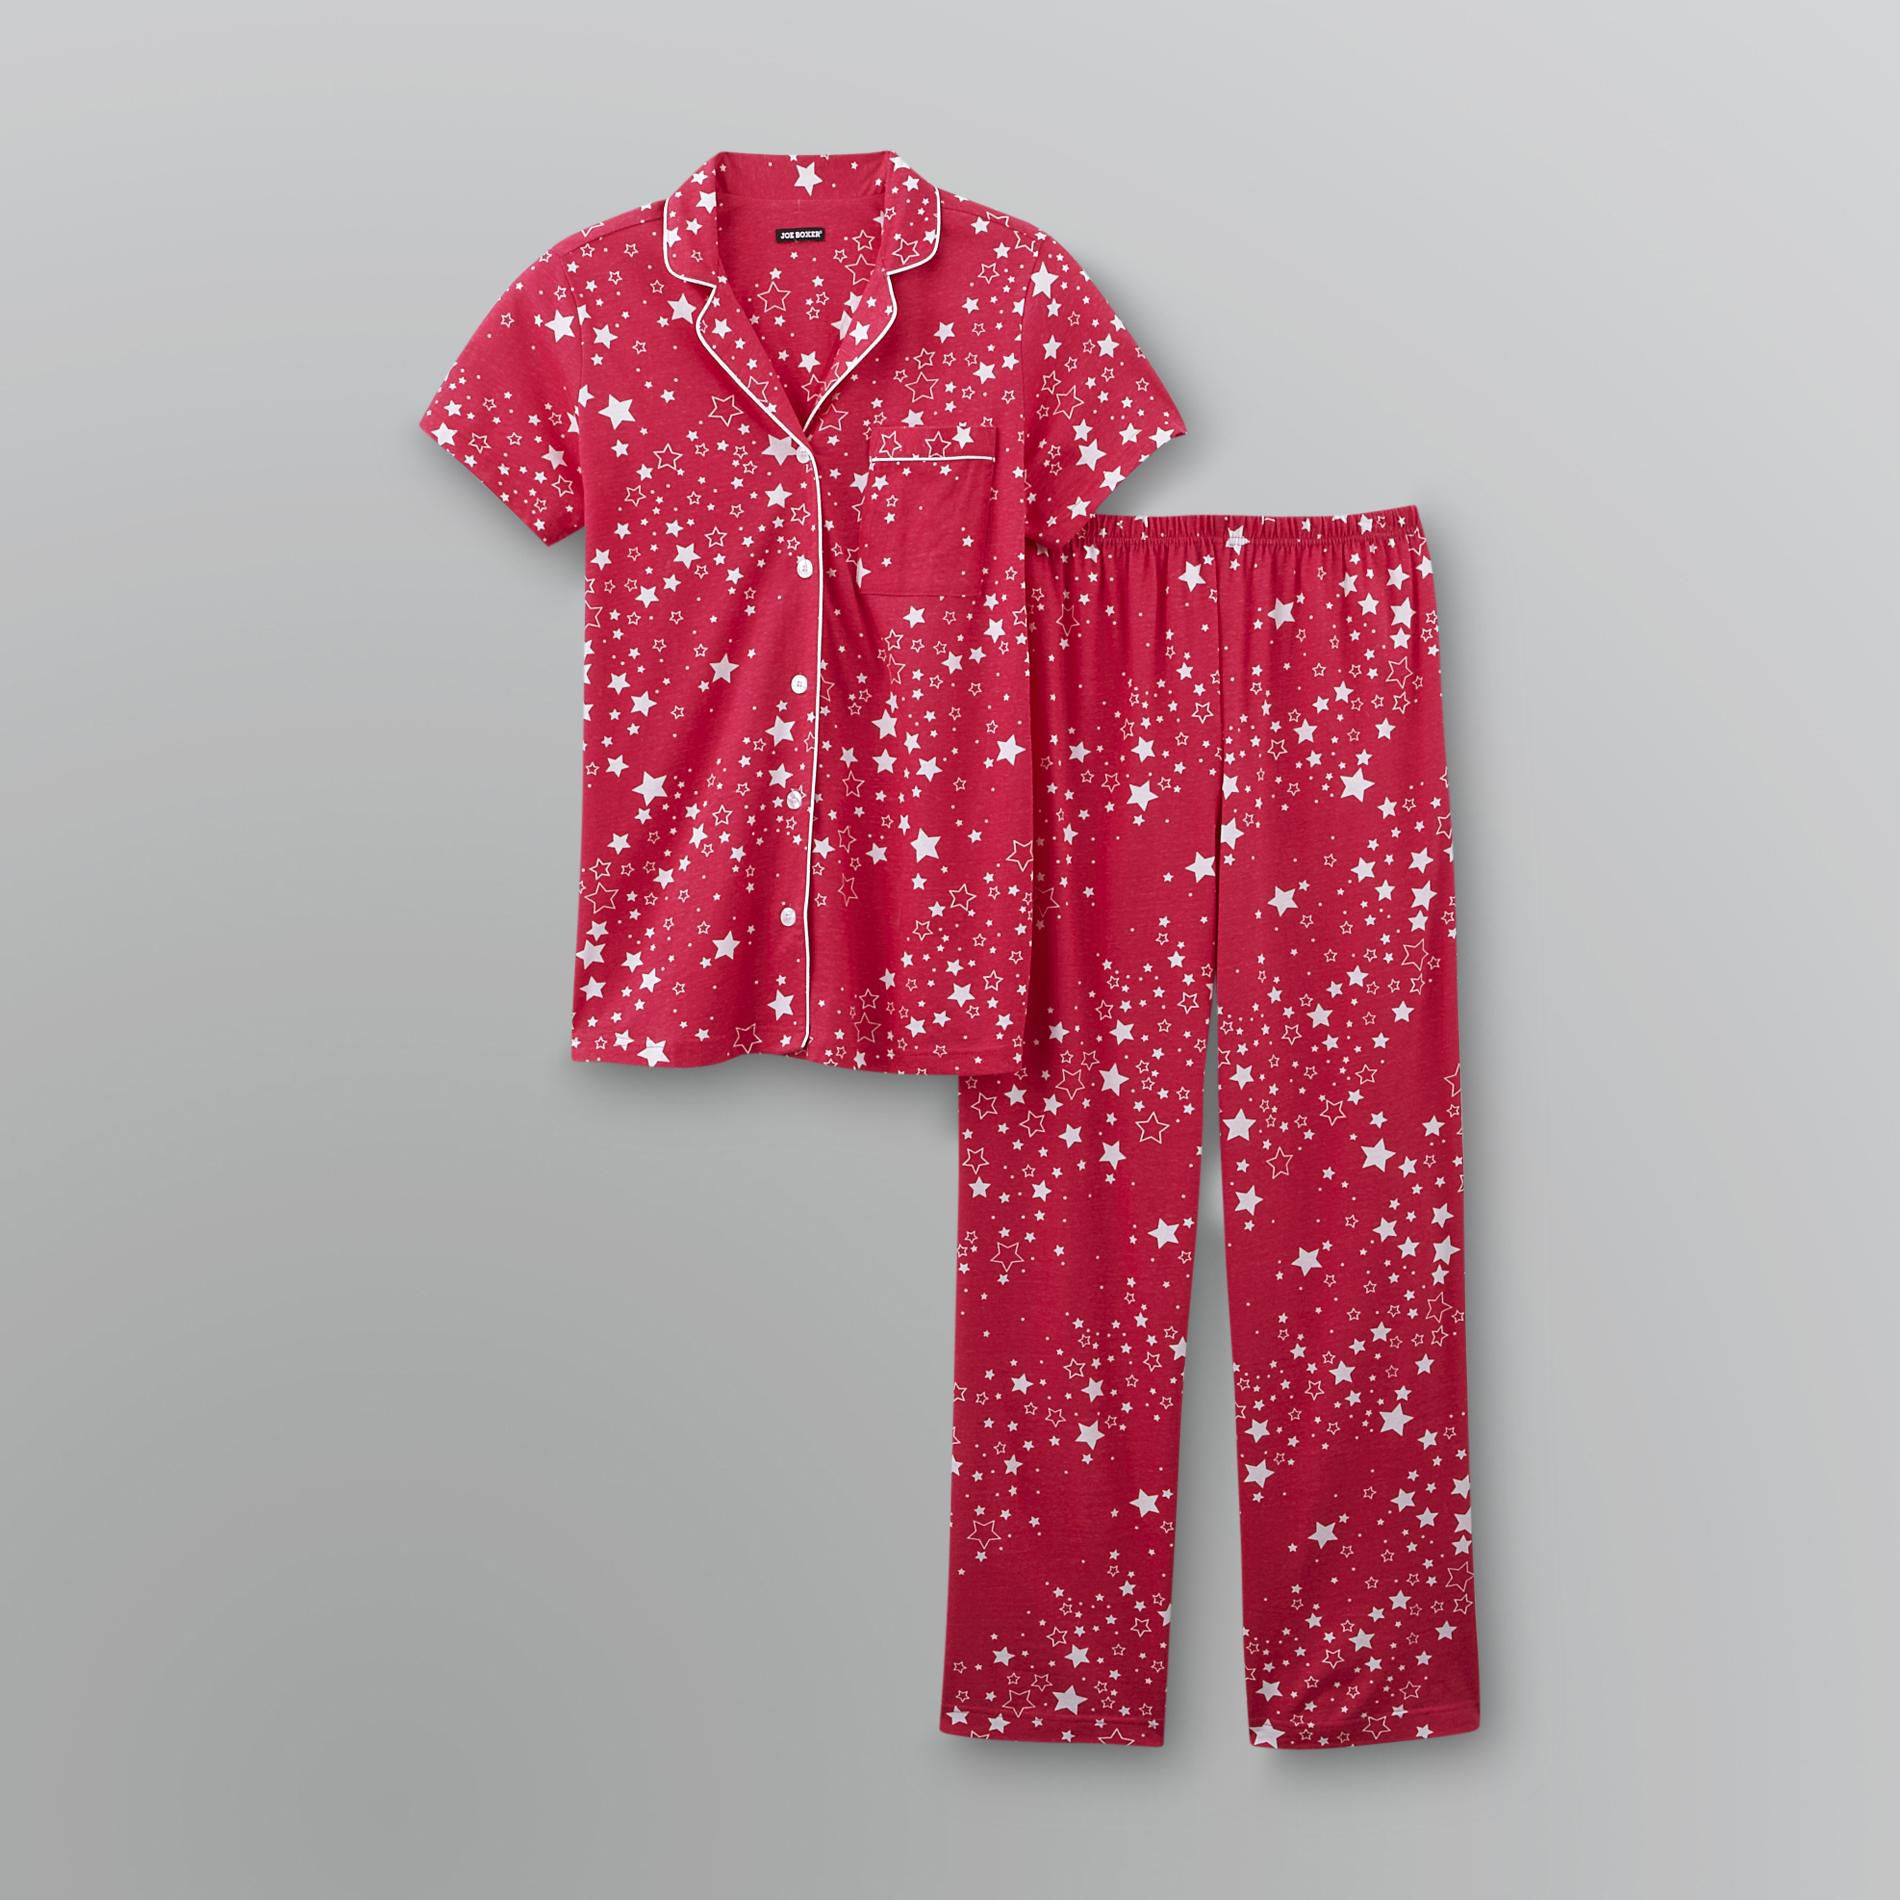 Joe Boxer Women's Knit Pajama Set - Stars